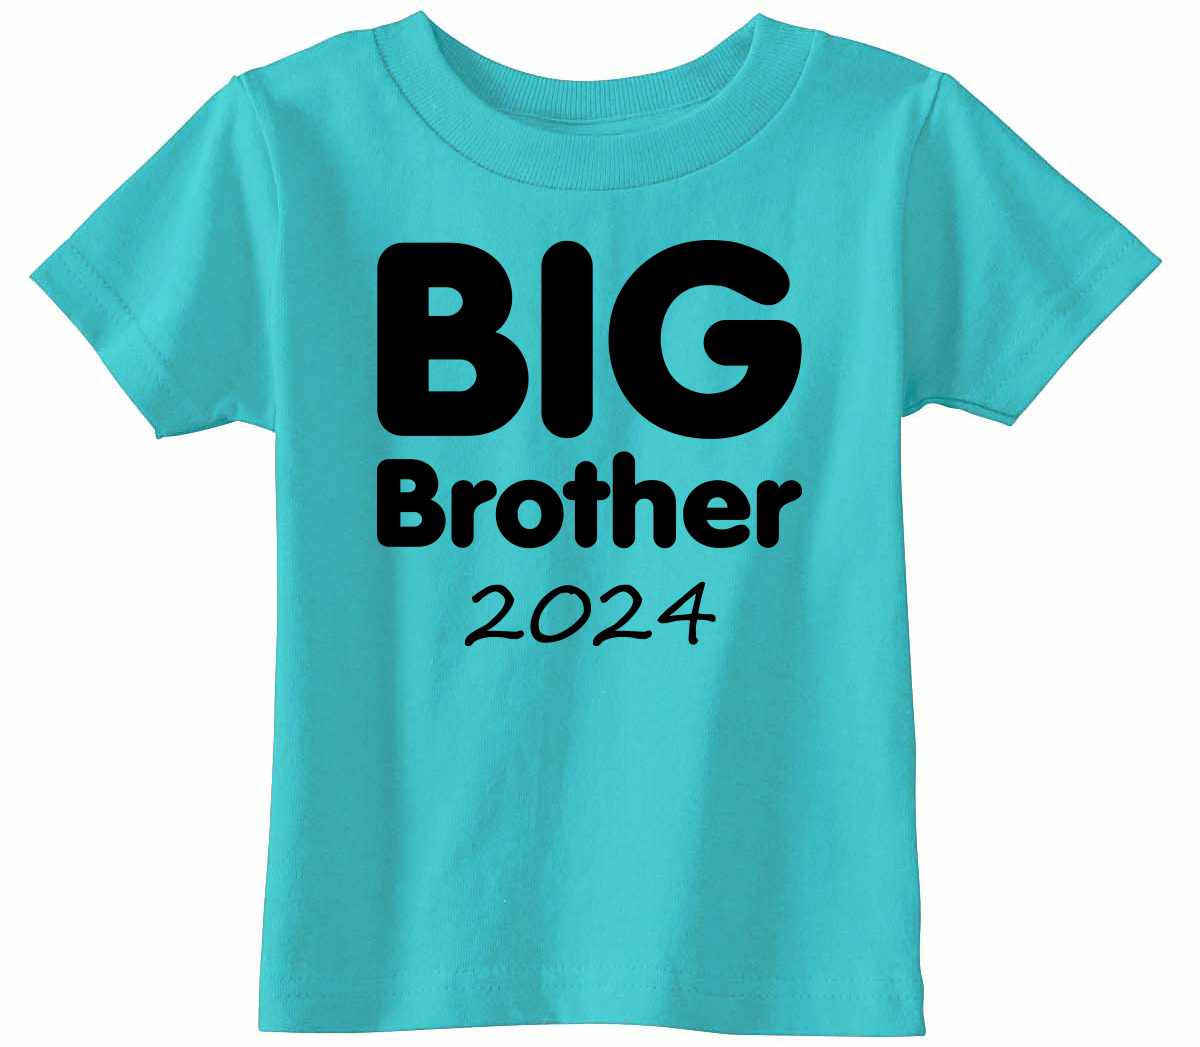 Big Brother 2024 on Infant-Toddler T-Shirt